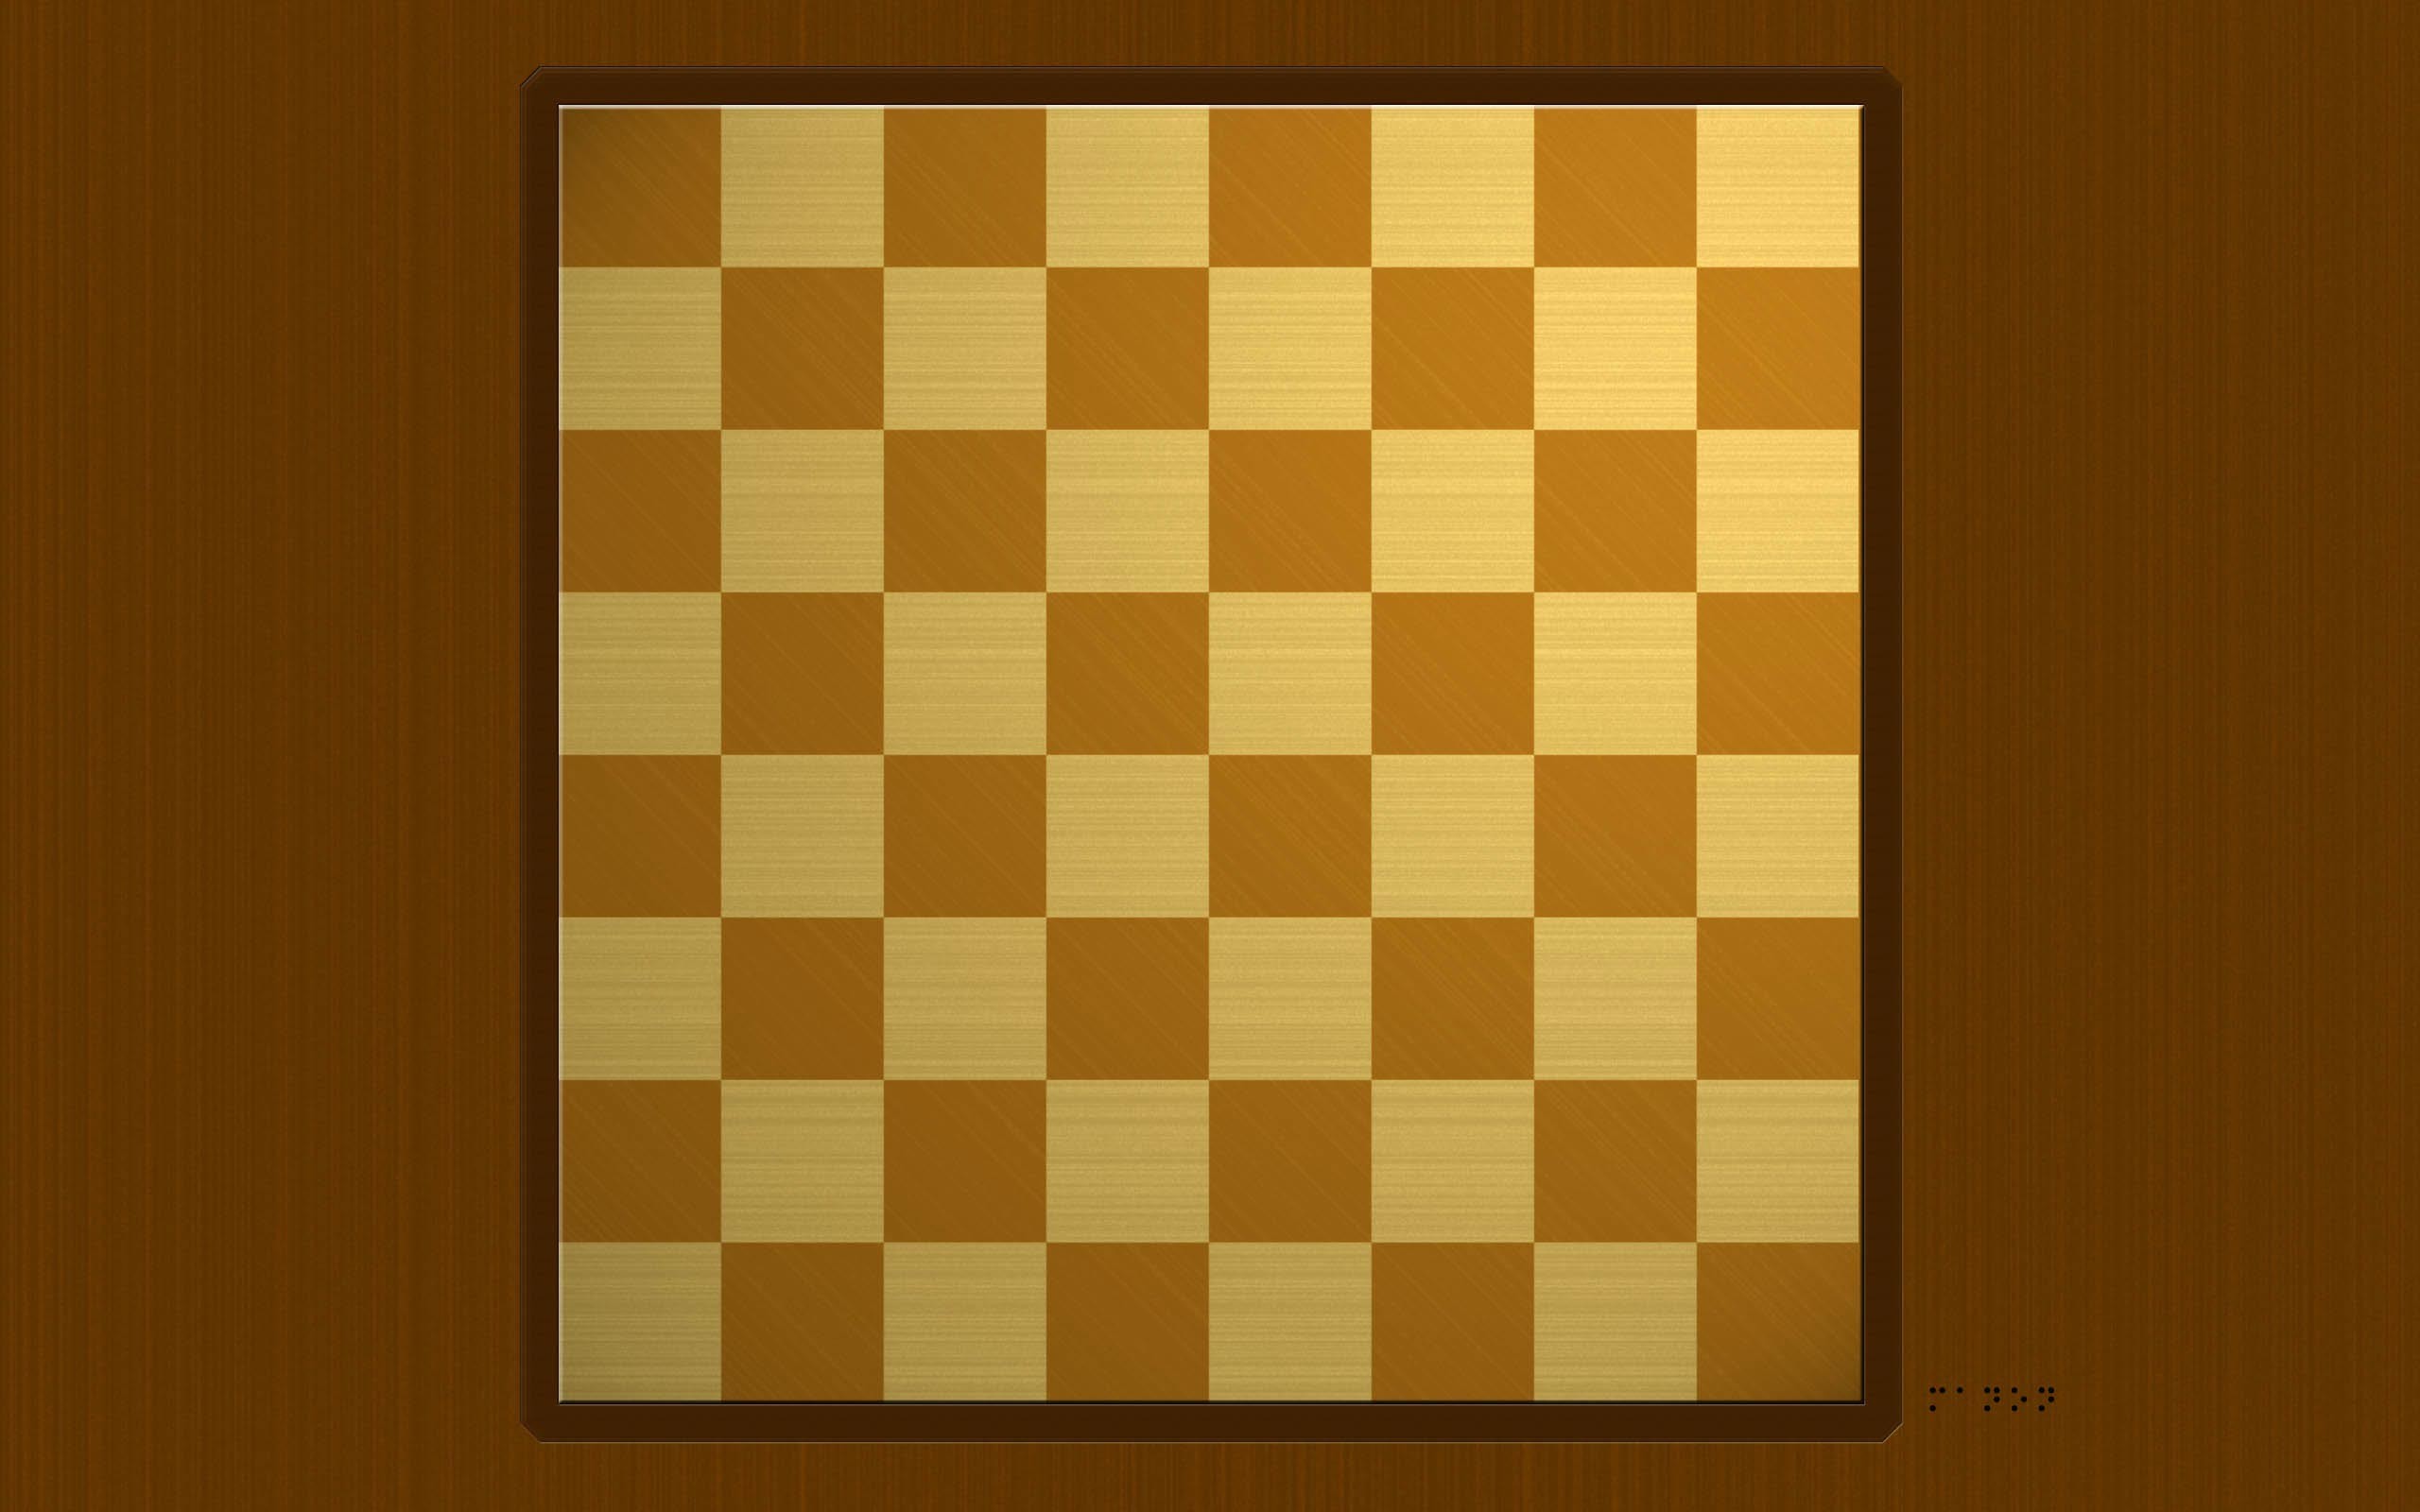 General 2560x1600 chess board games minimalism brown wooden surface digital art